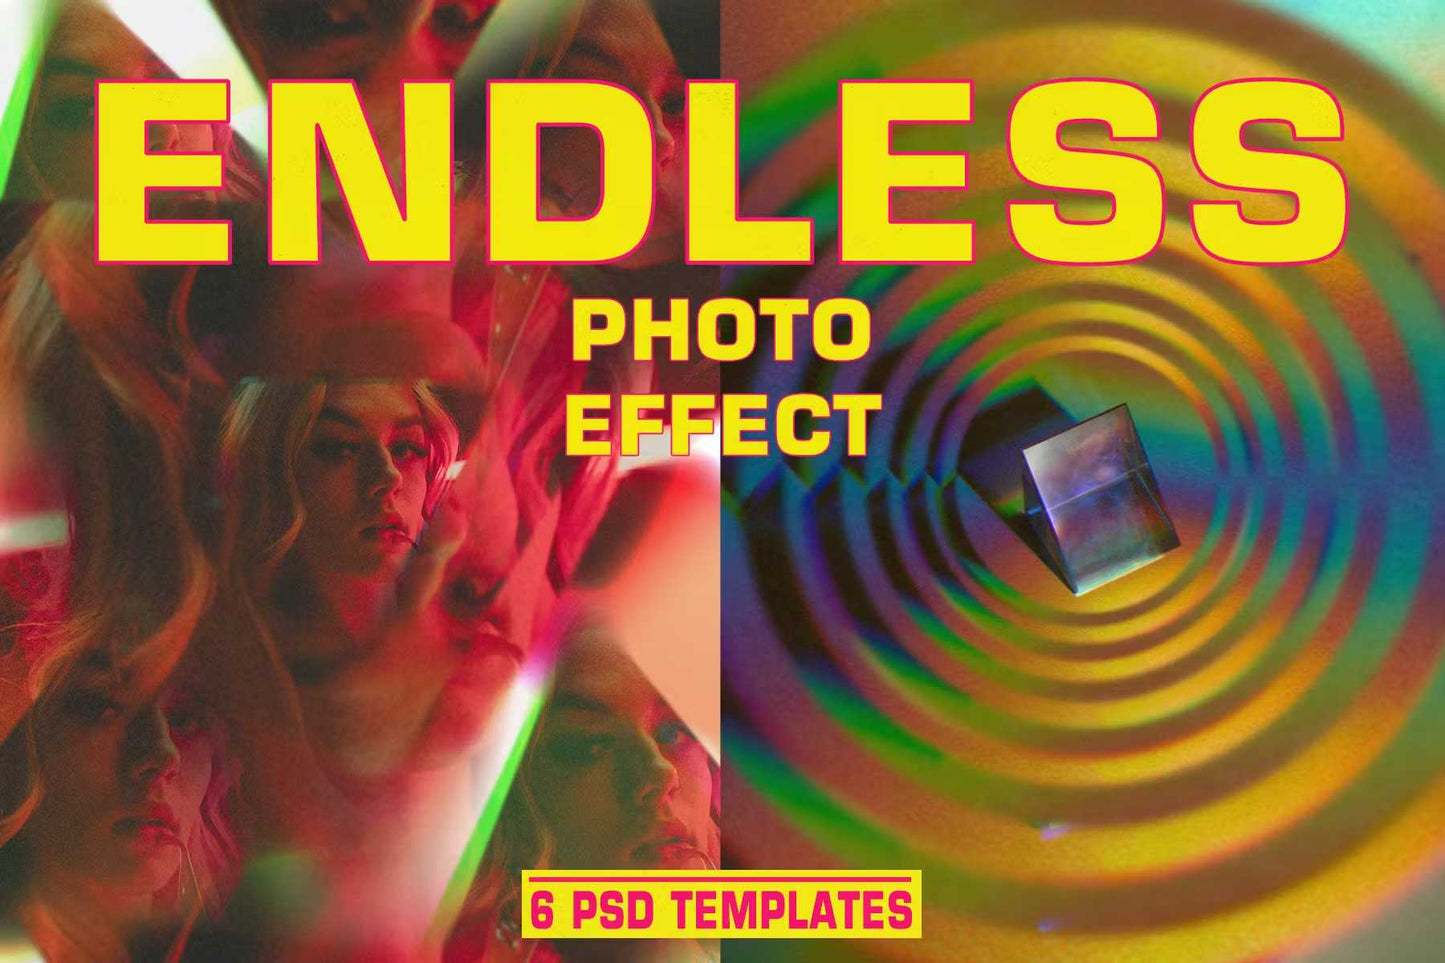 21-In-1 Grand Photoshop Effects Bundle - Photoboto